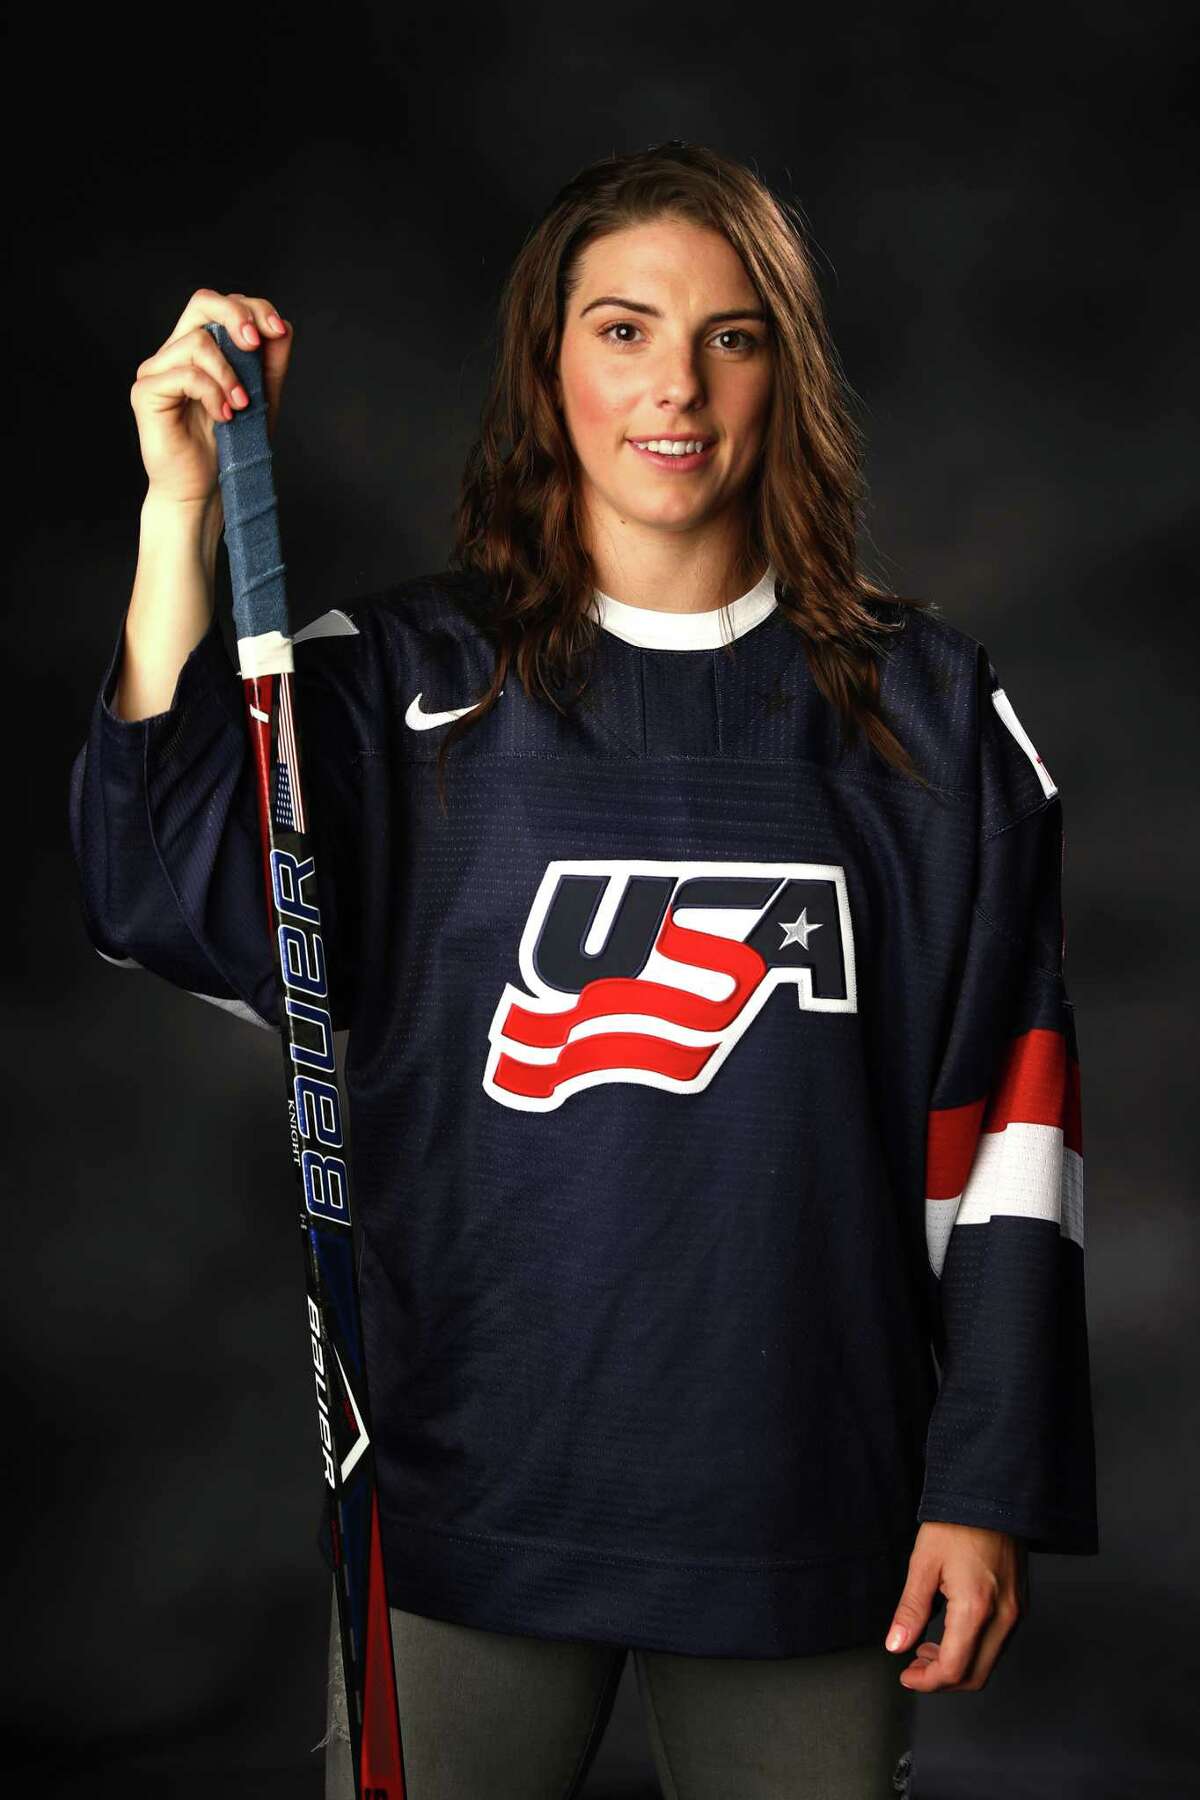 PARK CITY, UT - SEPTEMBER 26: Ice Hockey player Hilary Knight poses for a p...